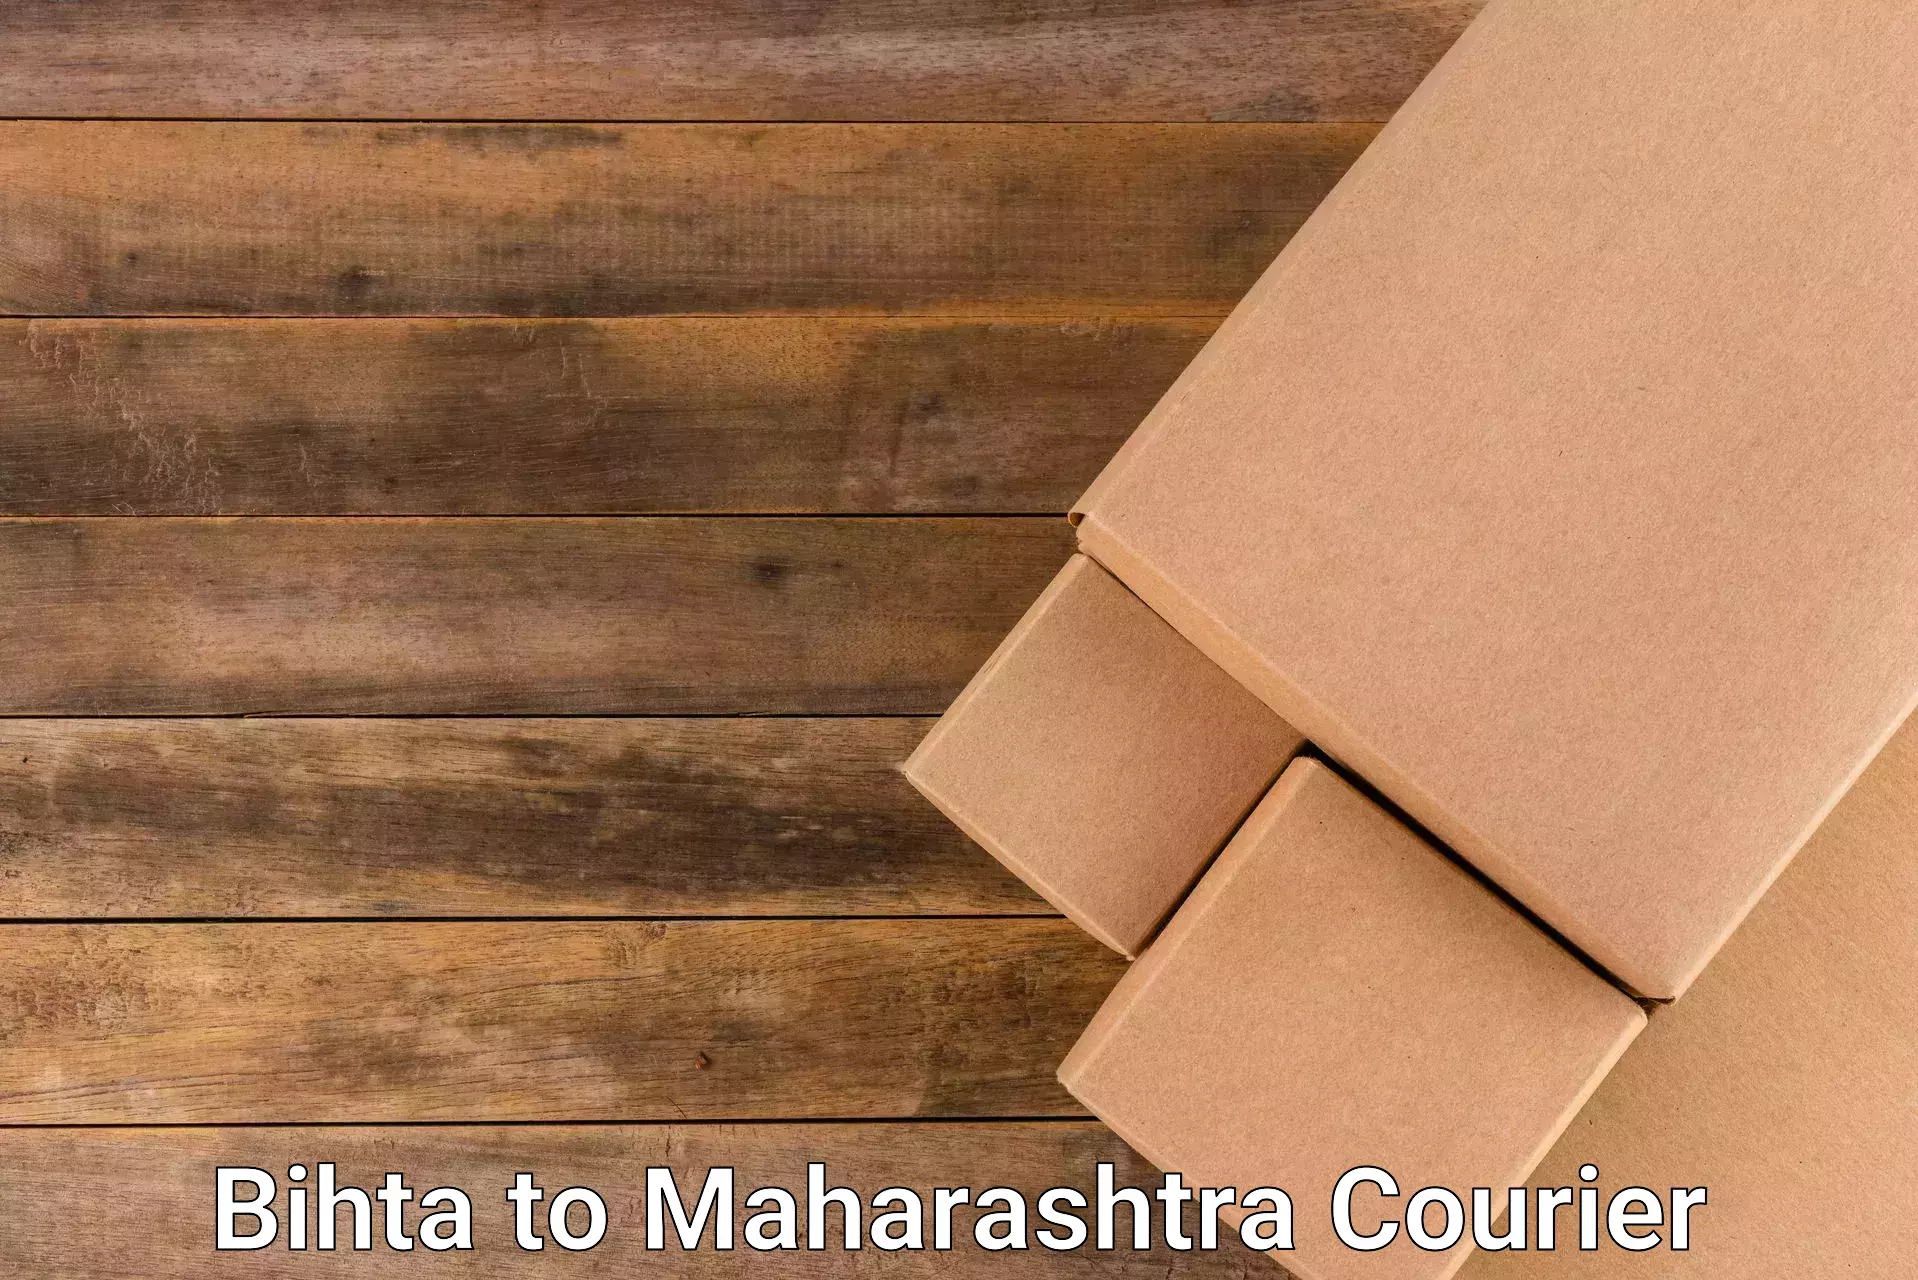 Logistics and distribution Bihta to Mahabaleshwar